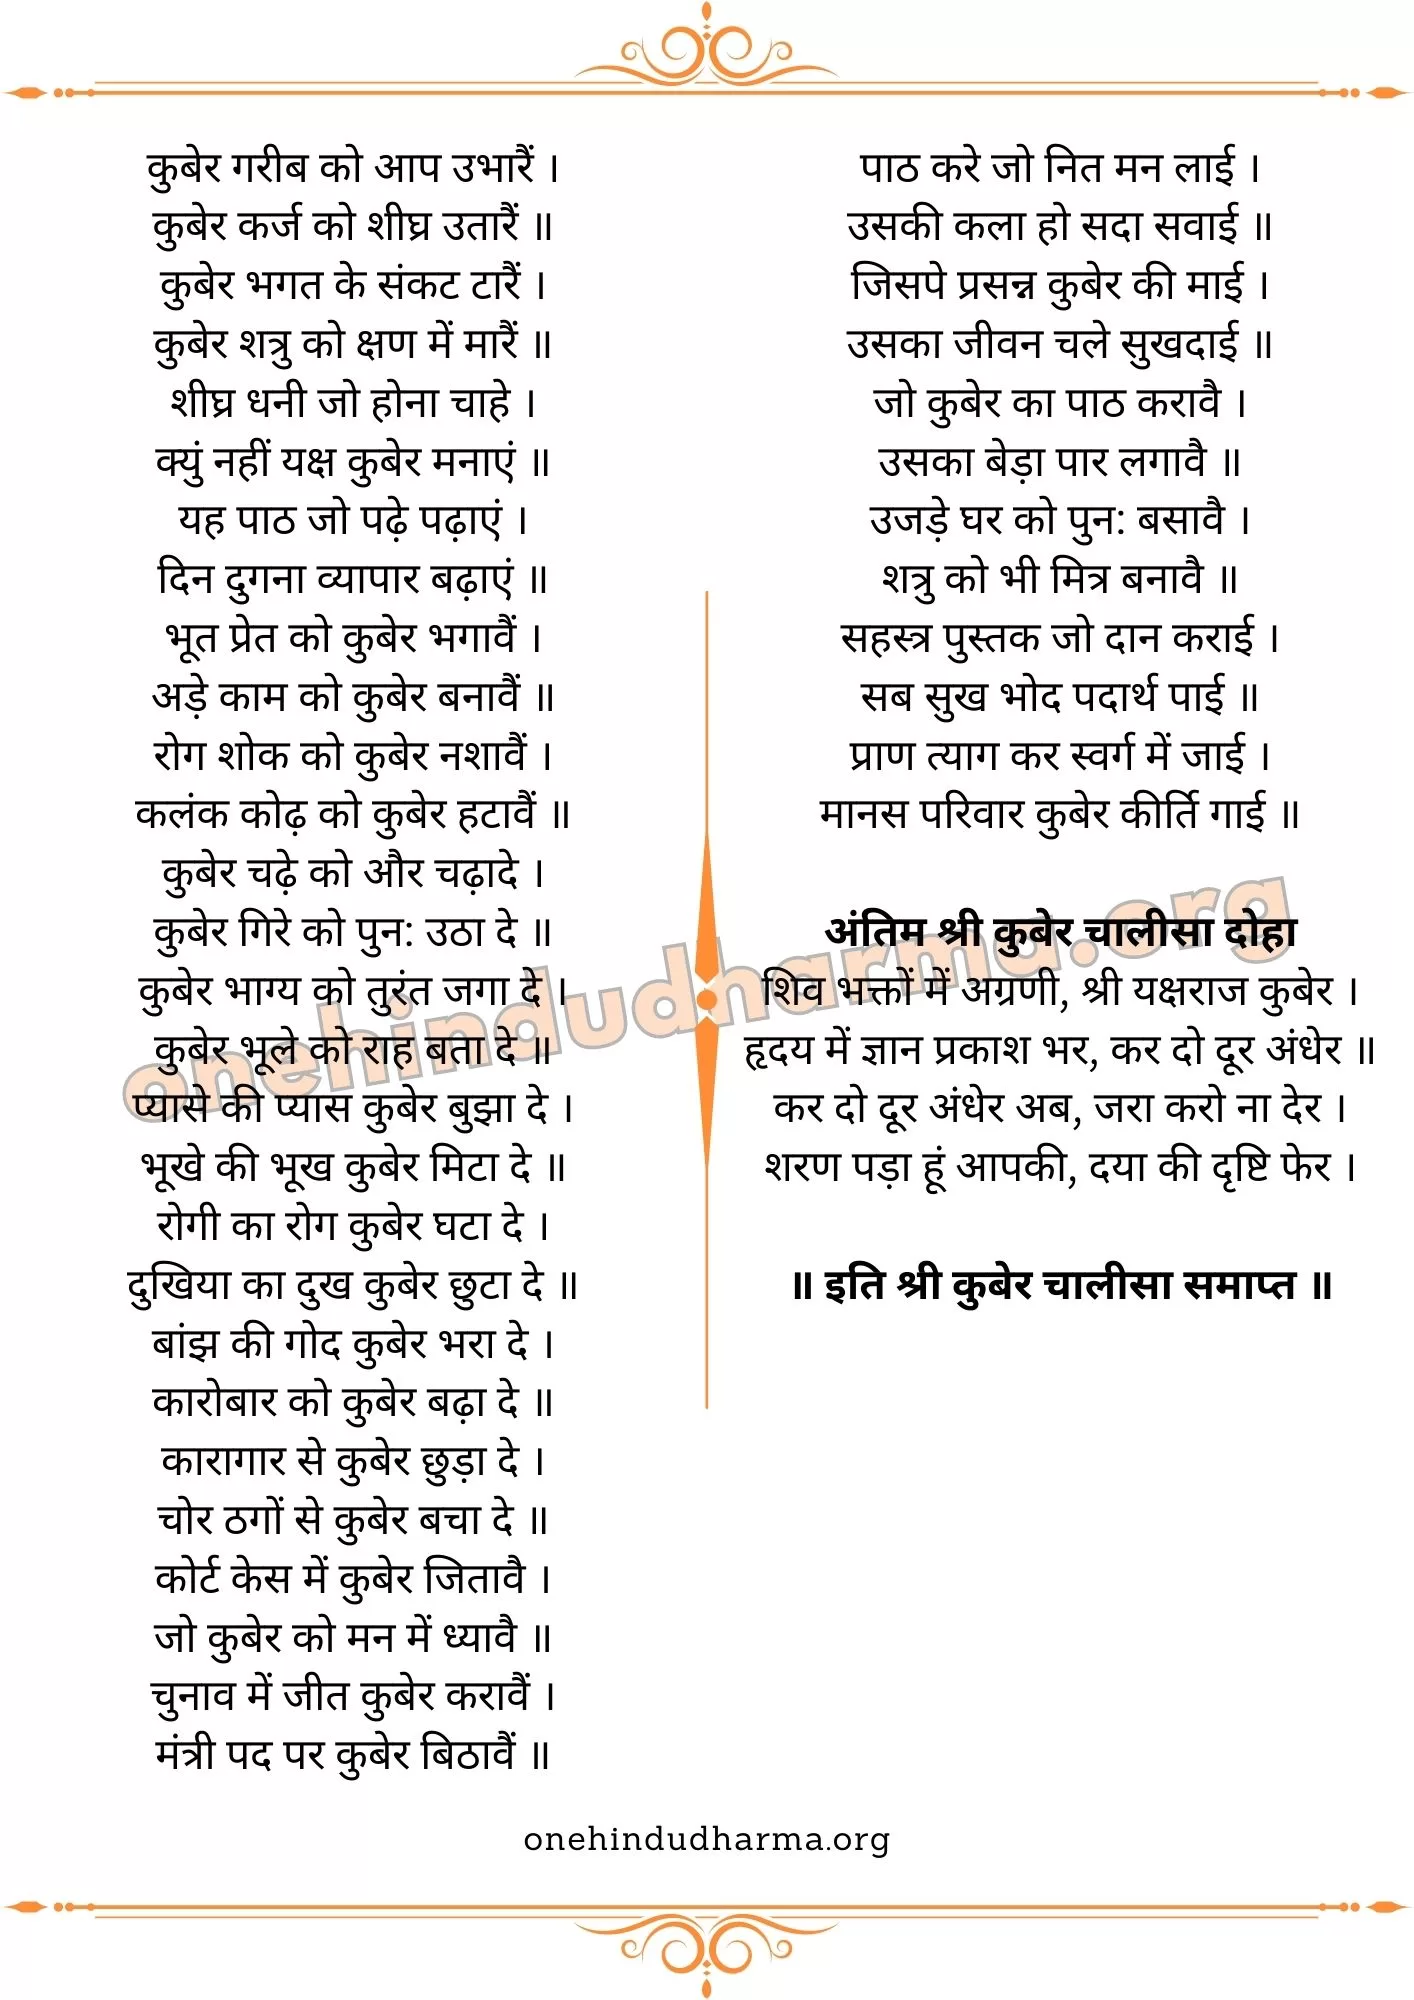 श्री कुबेर चालीसा (Shri Kuber Chalisa In Hindi Lyrics)